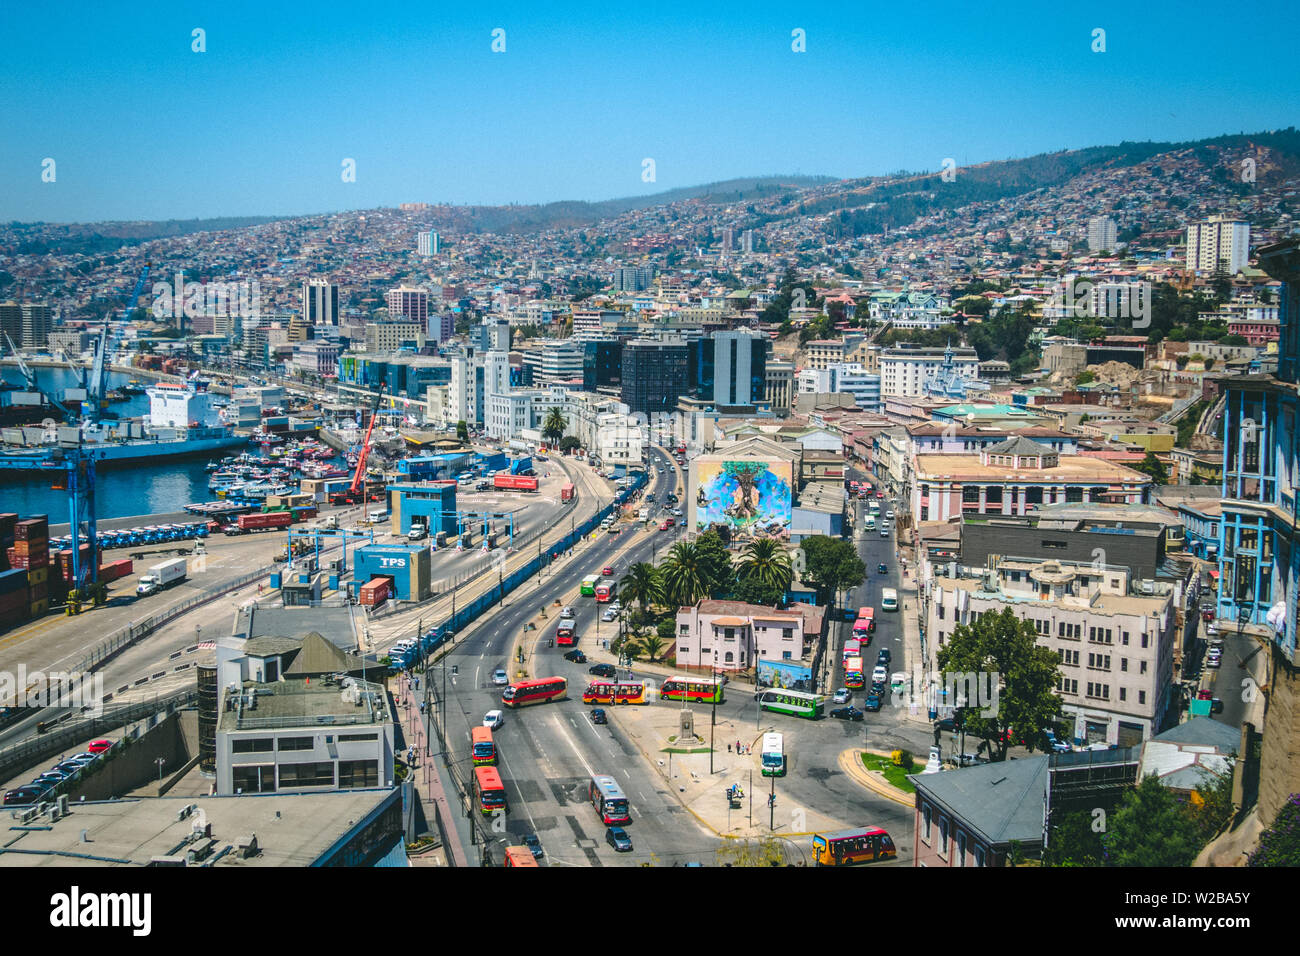 VALPARAISO, CHILE - FEBRUARY 2015: A View of downtown Valparaiso Stock Photo